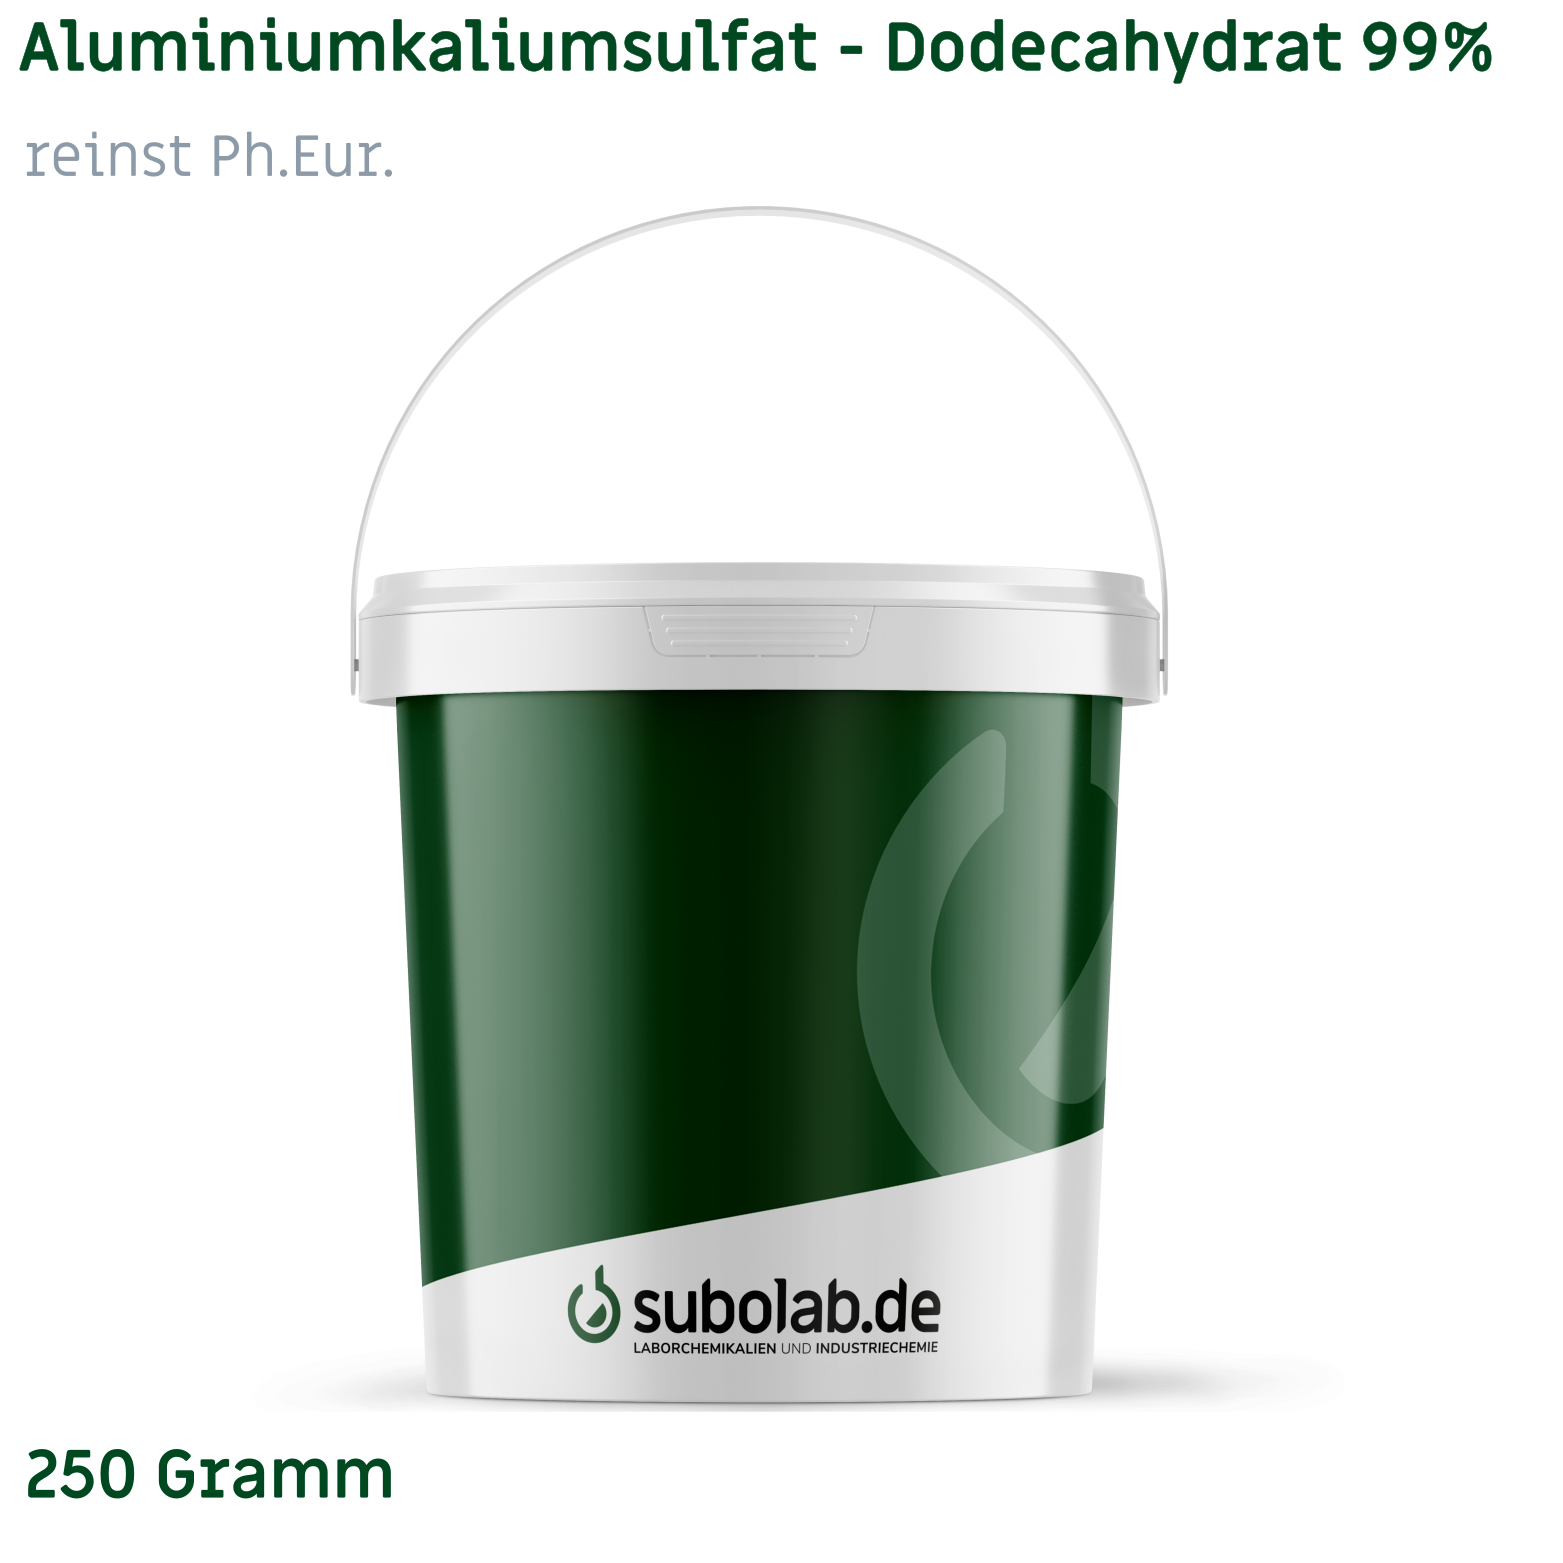 Bild von Aluminiumkaliumsulfat - Dodecahydrat 99% reinst Ph.Eur. (250 Gramm)